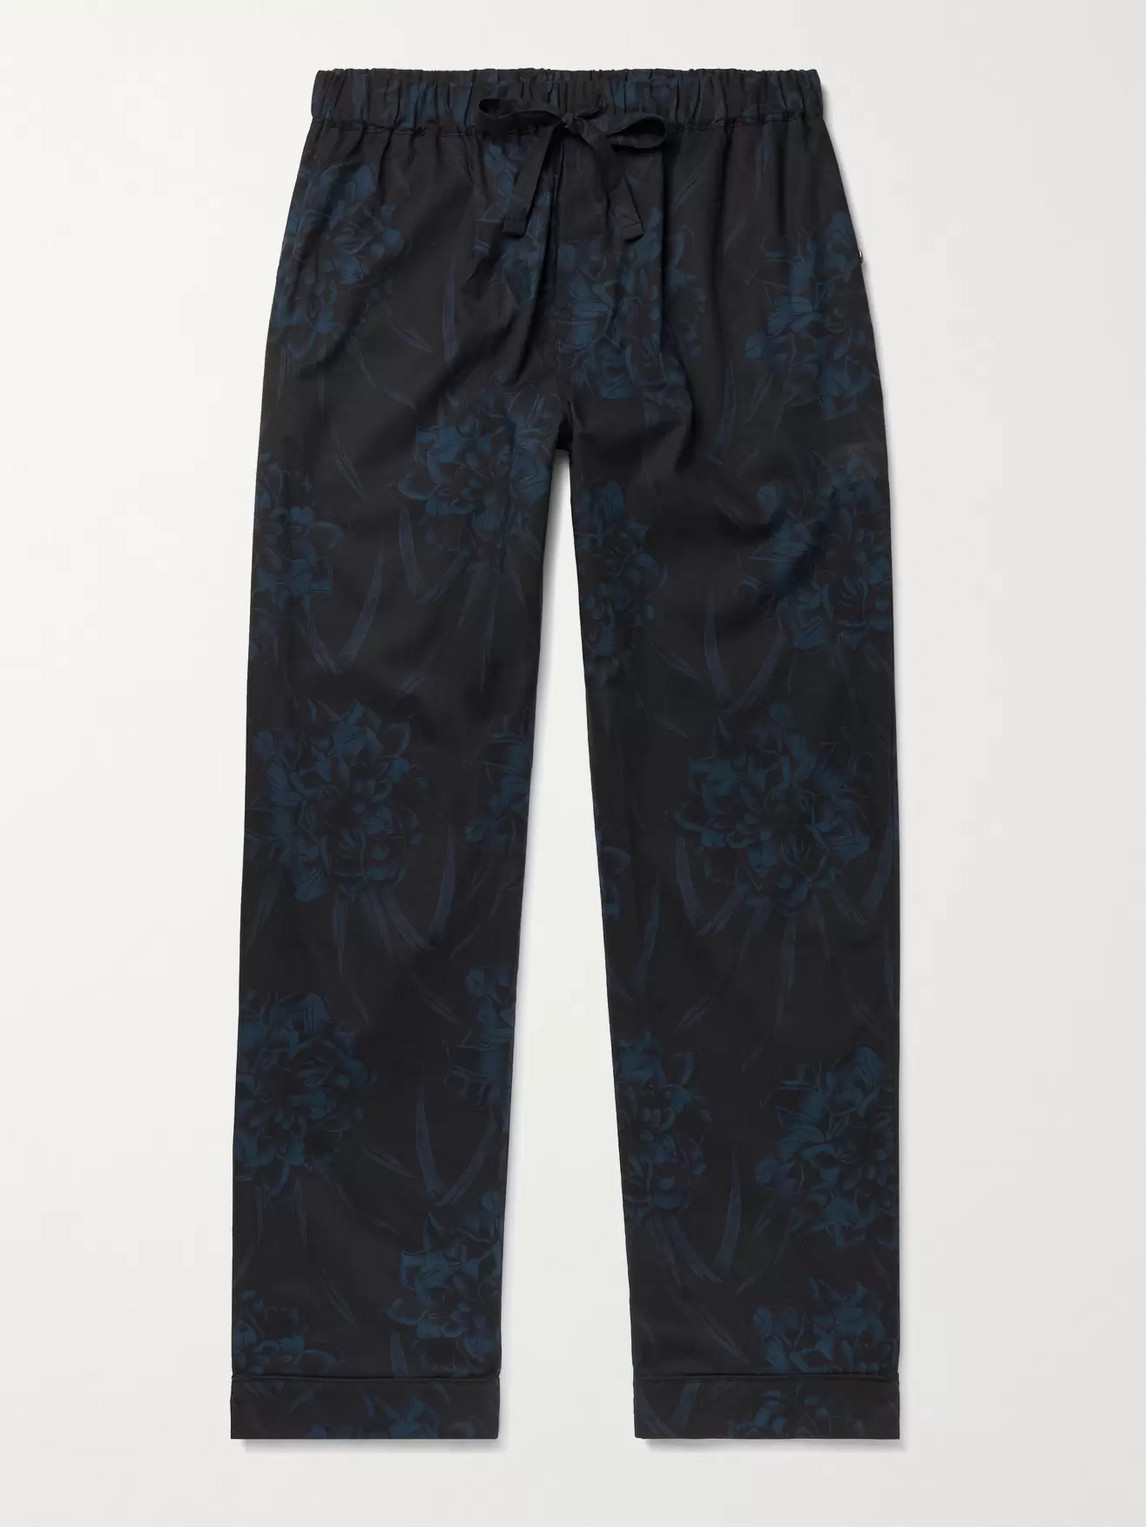 Desmond & Dempsey Printed Cotton Pyjama Trousers In Black